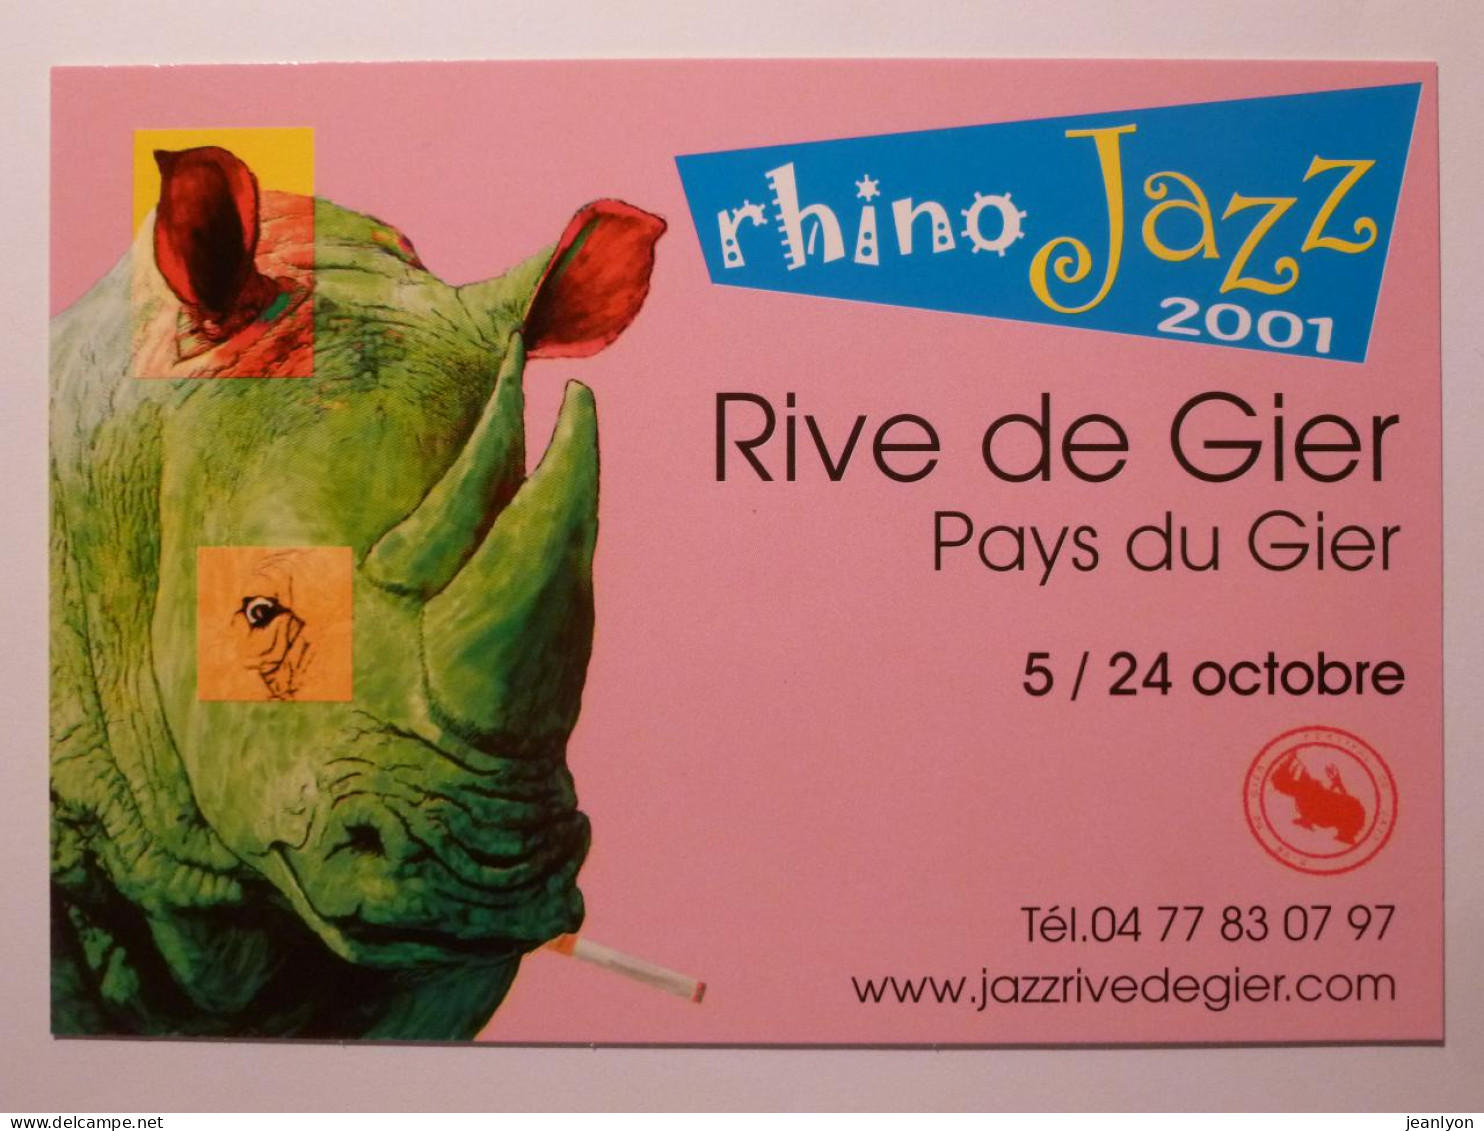 RHINOCEROS VERT Avec Cigarette Dans La Bouche - Rhino Jazz 2001 - Rive De Gier ( Loire ) - Carte Publicitaire - Rhinoceros